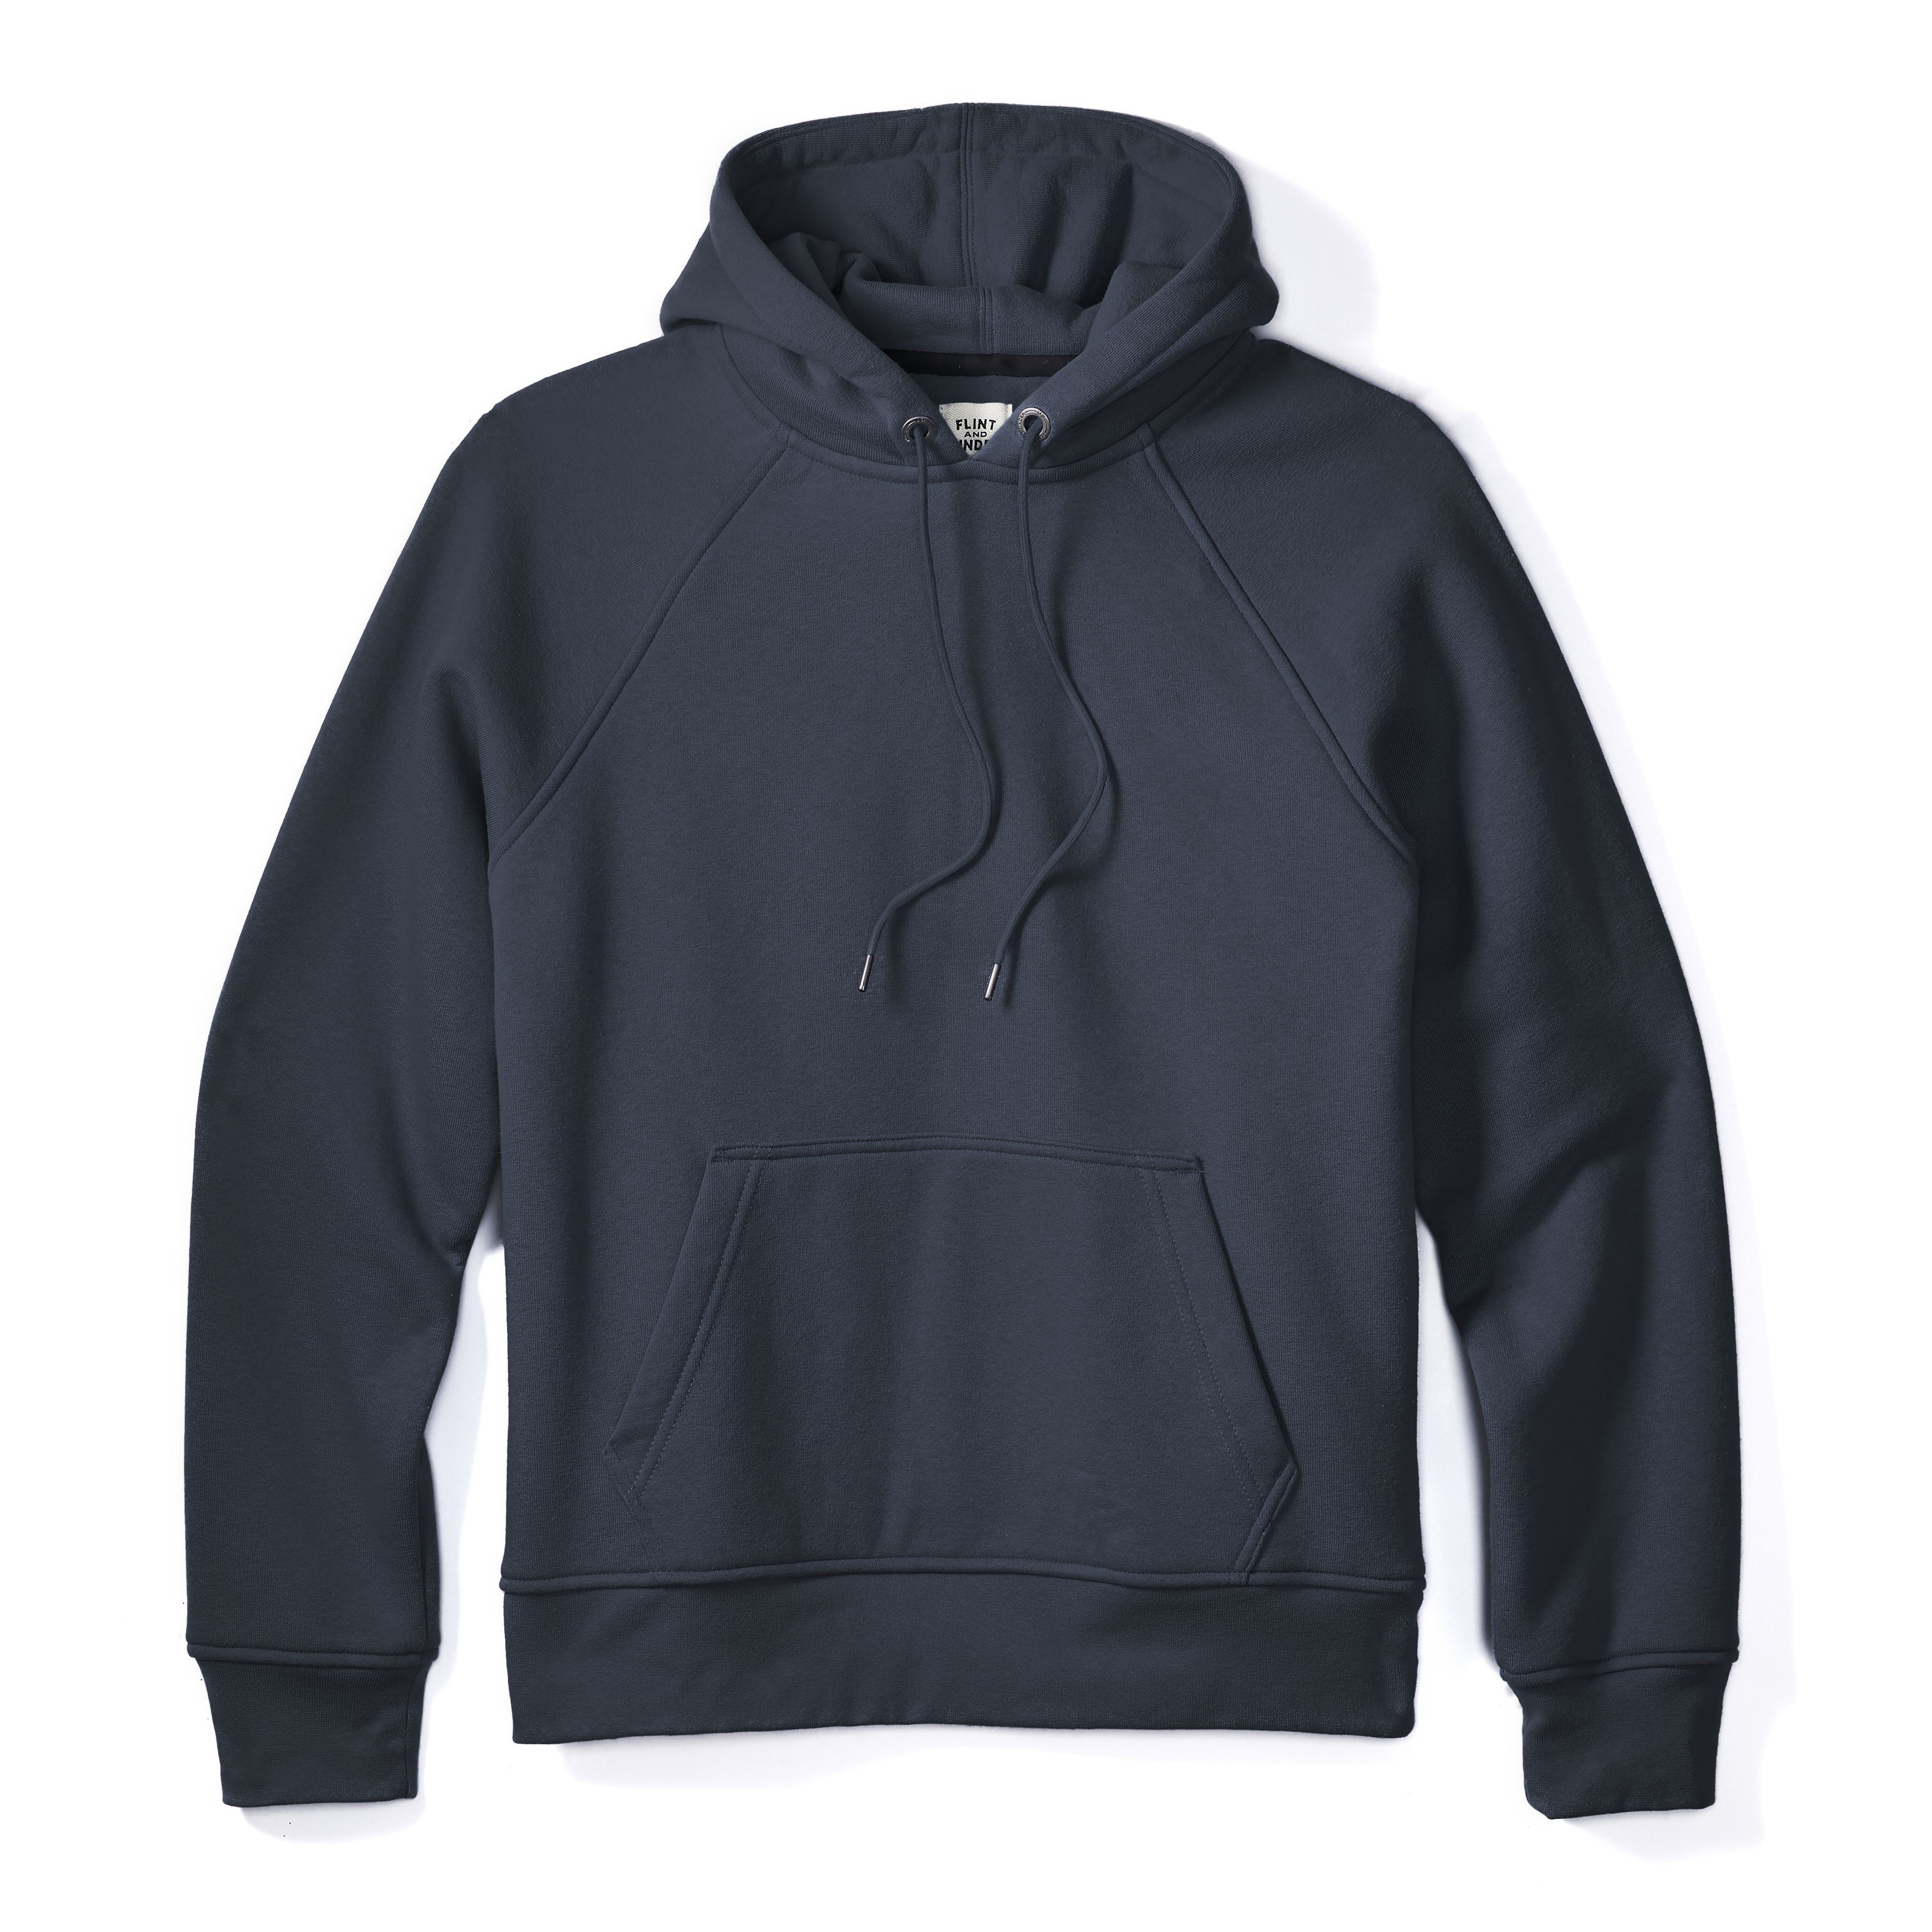 Men's Plain Hoodie Cotton Zip Up Casual Jacket Sweatshirt Hooded Hoody Top Size 